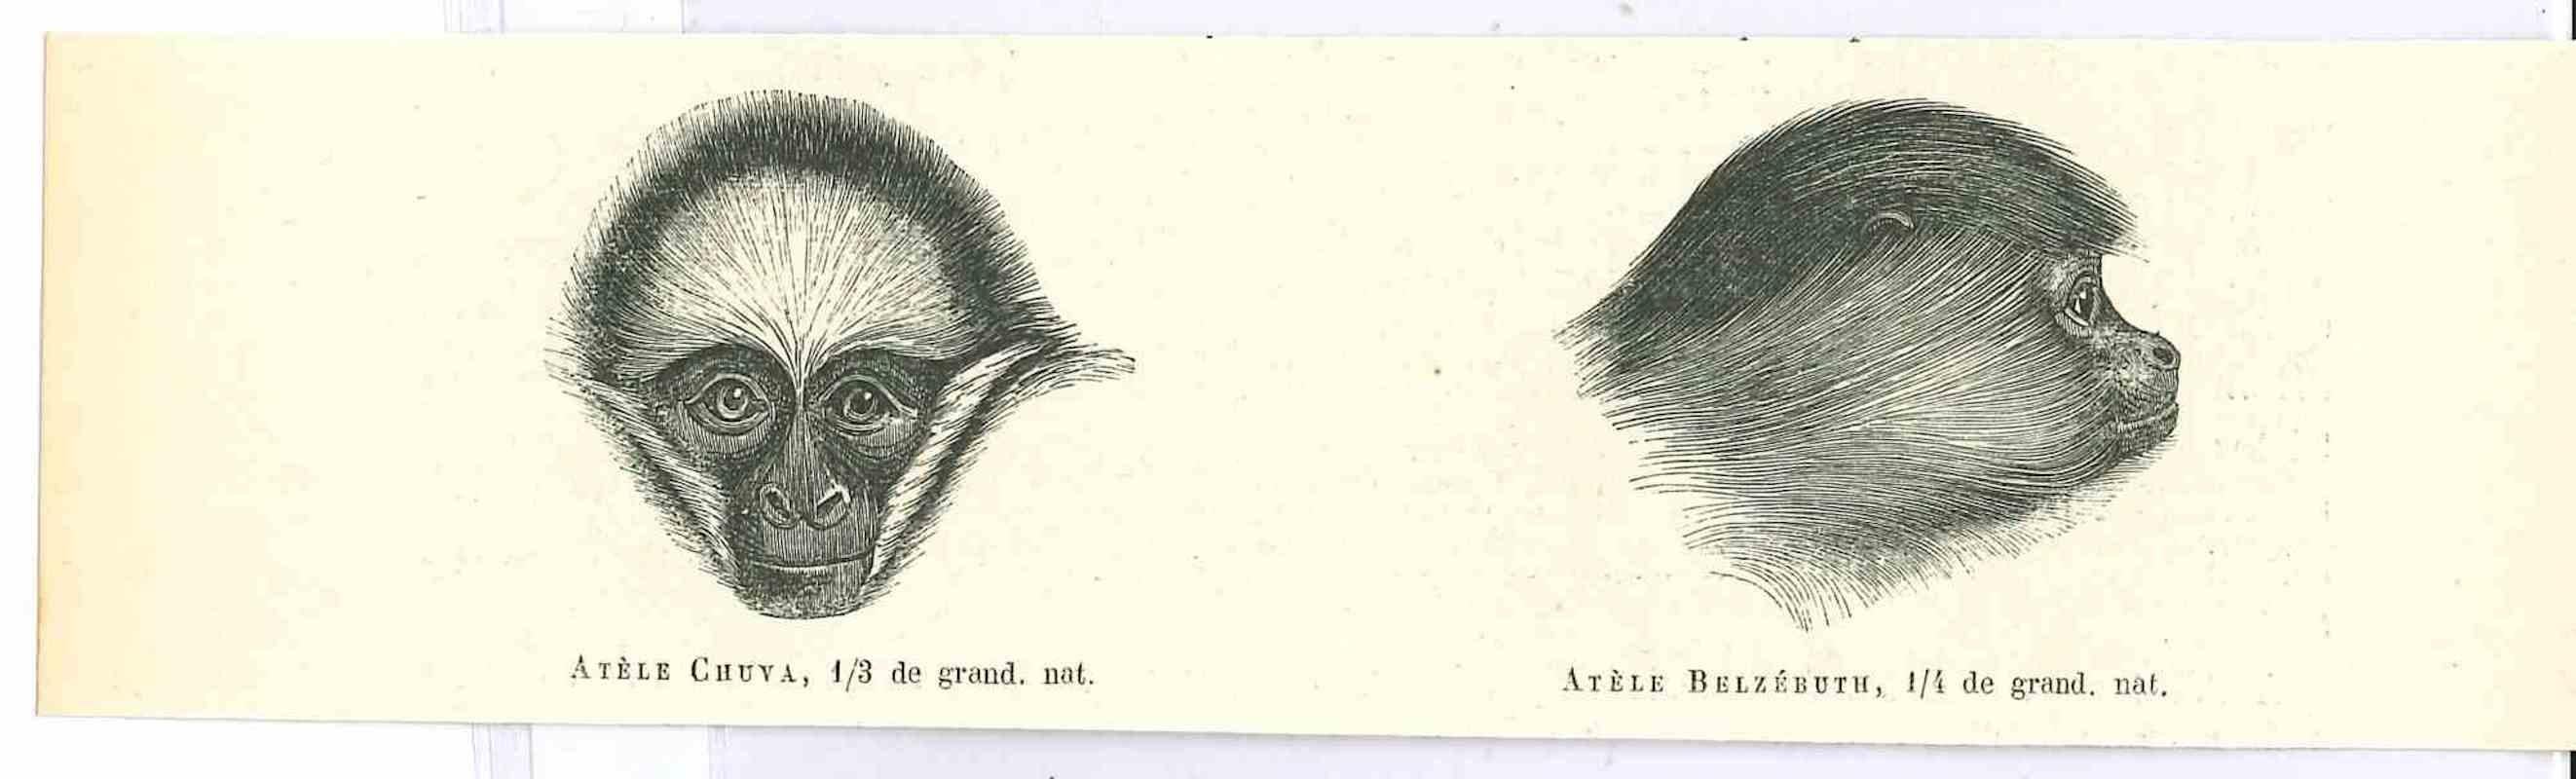 Paul Gervais  Animal Print – The Monkey – Lithographie von Paul Gervais, 1854